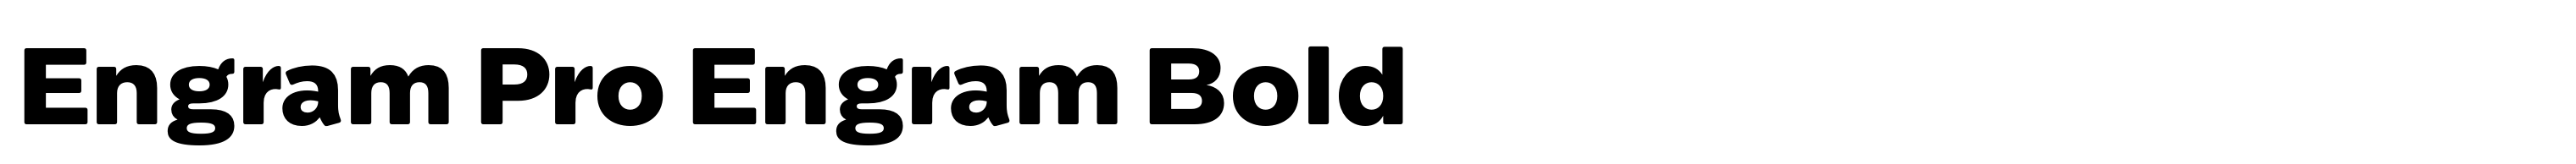 Engram Pro Engram Bold